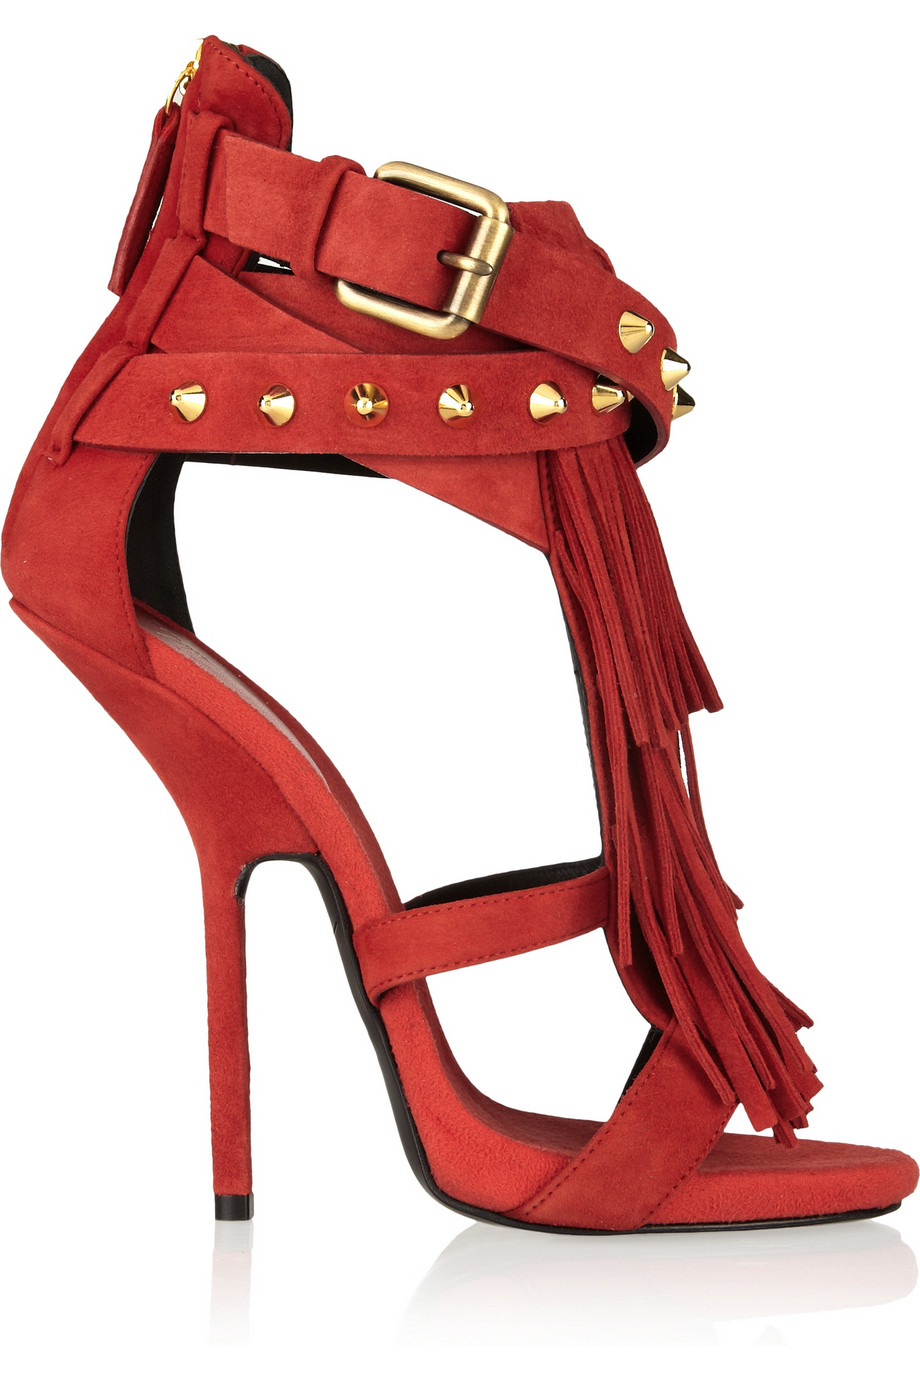 Shoeniverse: GIUSEPPE ZANOTTI Red Fringed Studded Suede Sandals